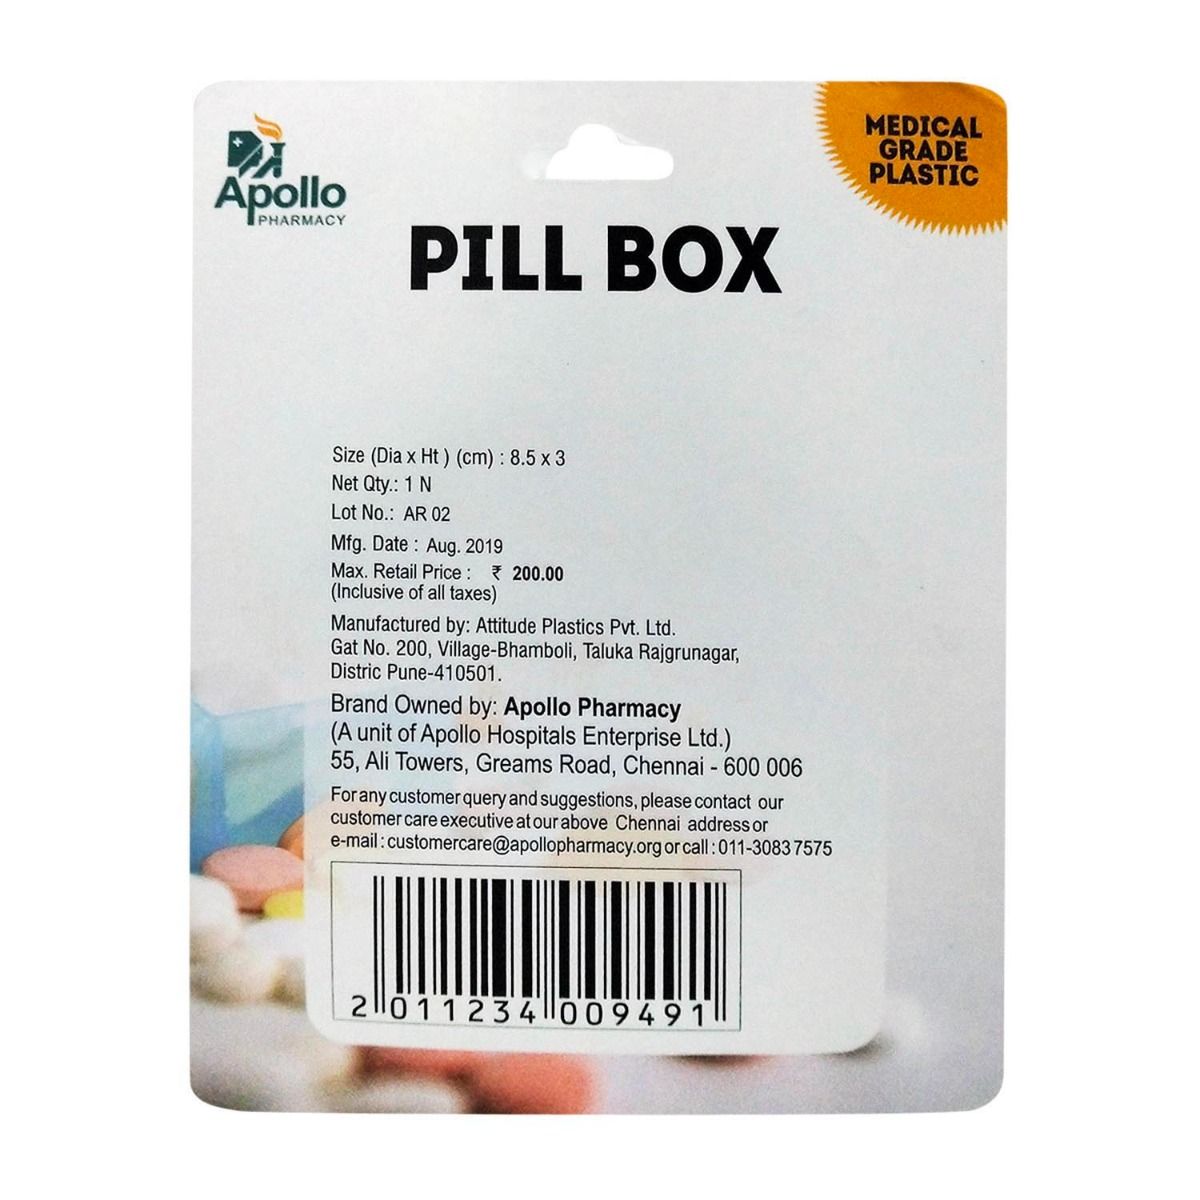 Apollo Pharmacy Pill Box Round 7 Days, 1 Kit, Pack of 1 